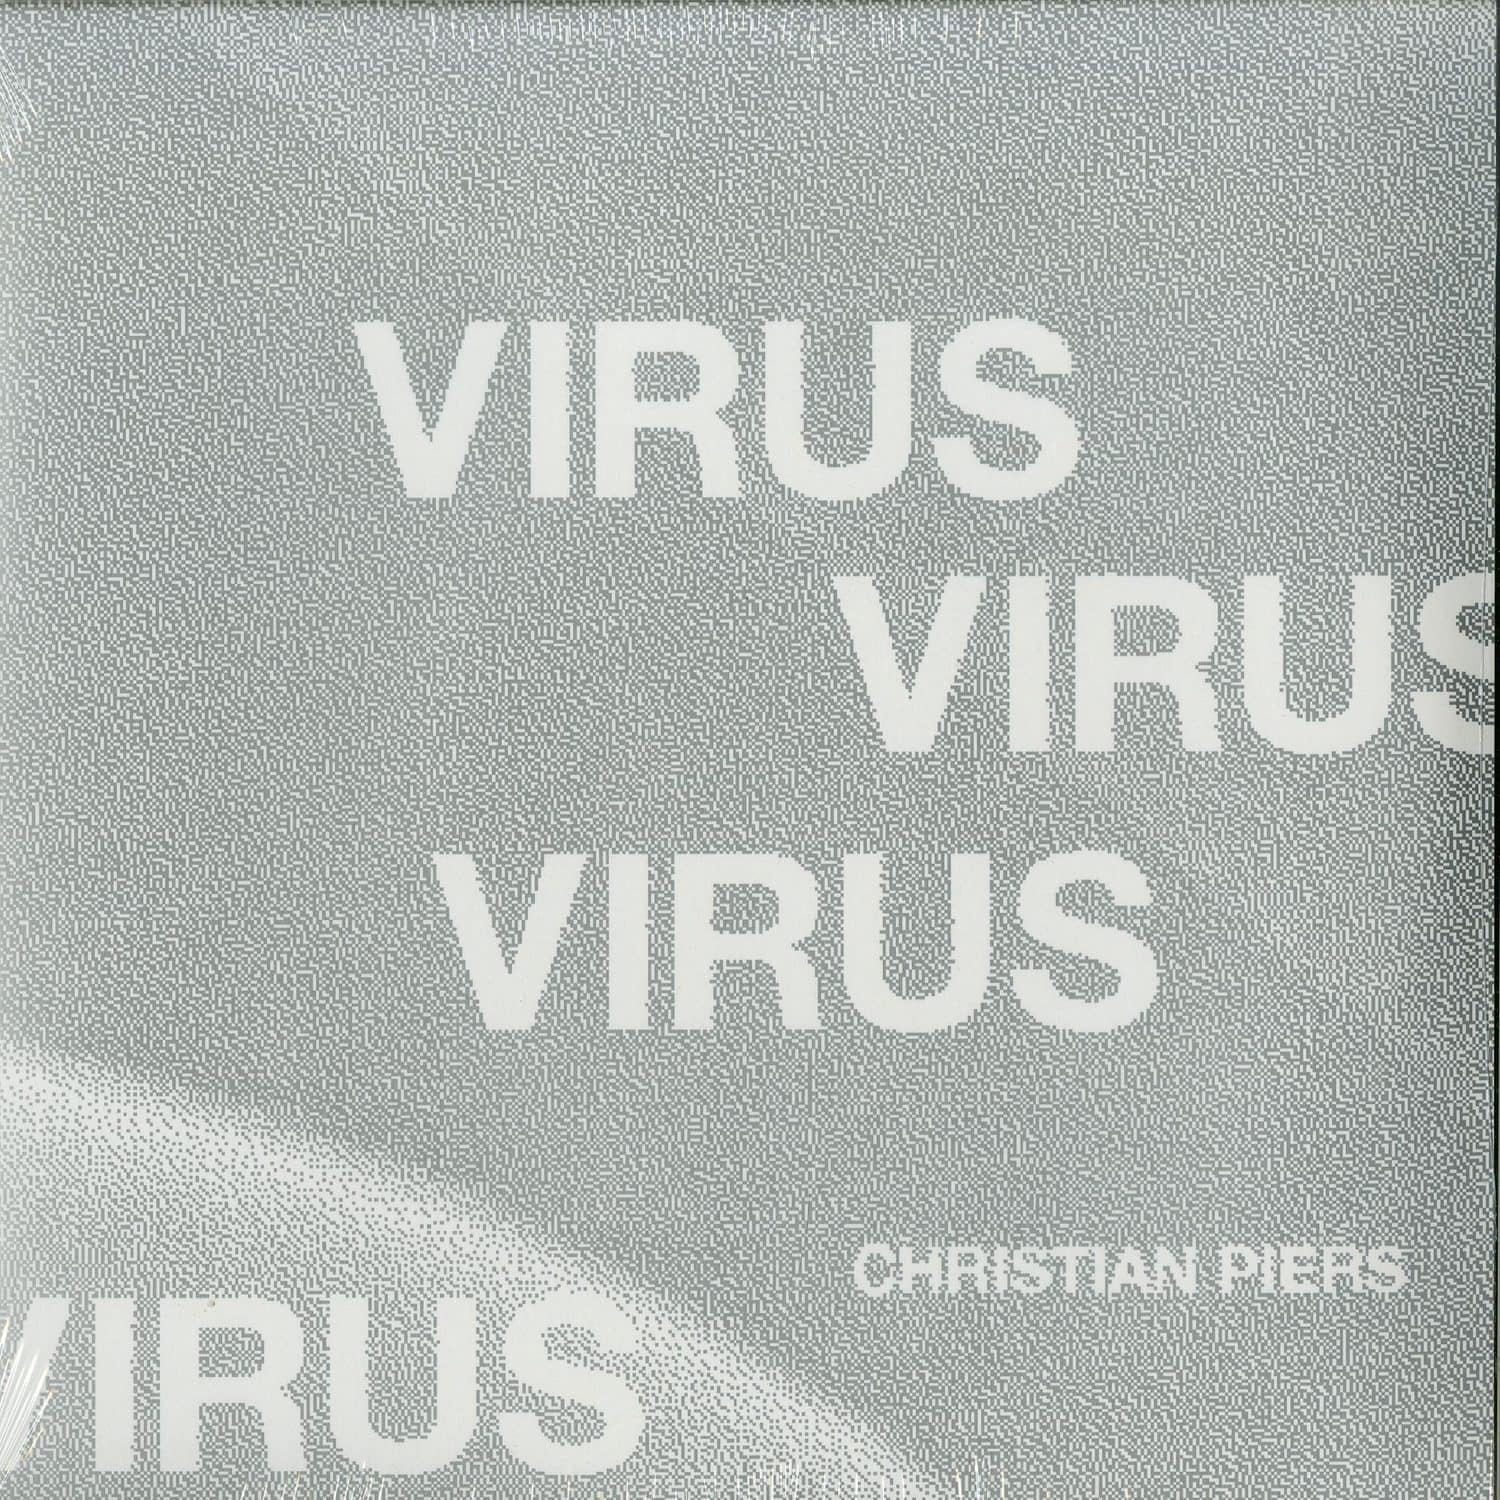 Christian Piers - VIRUS 